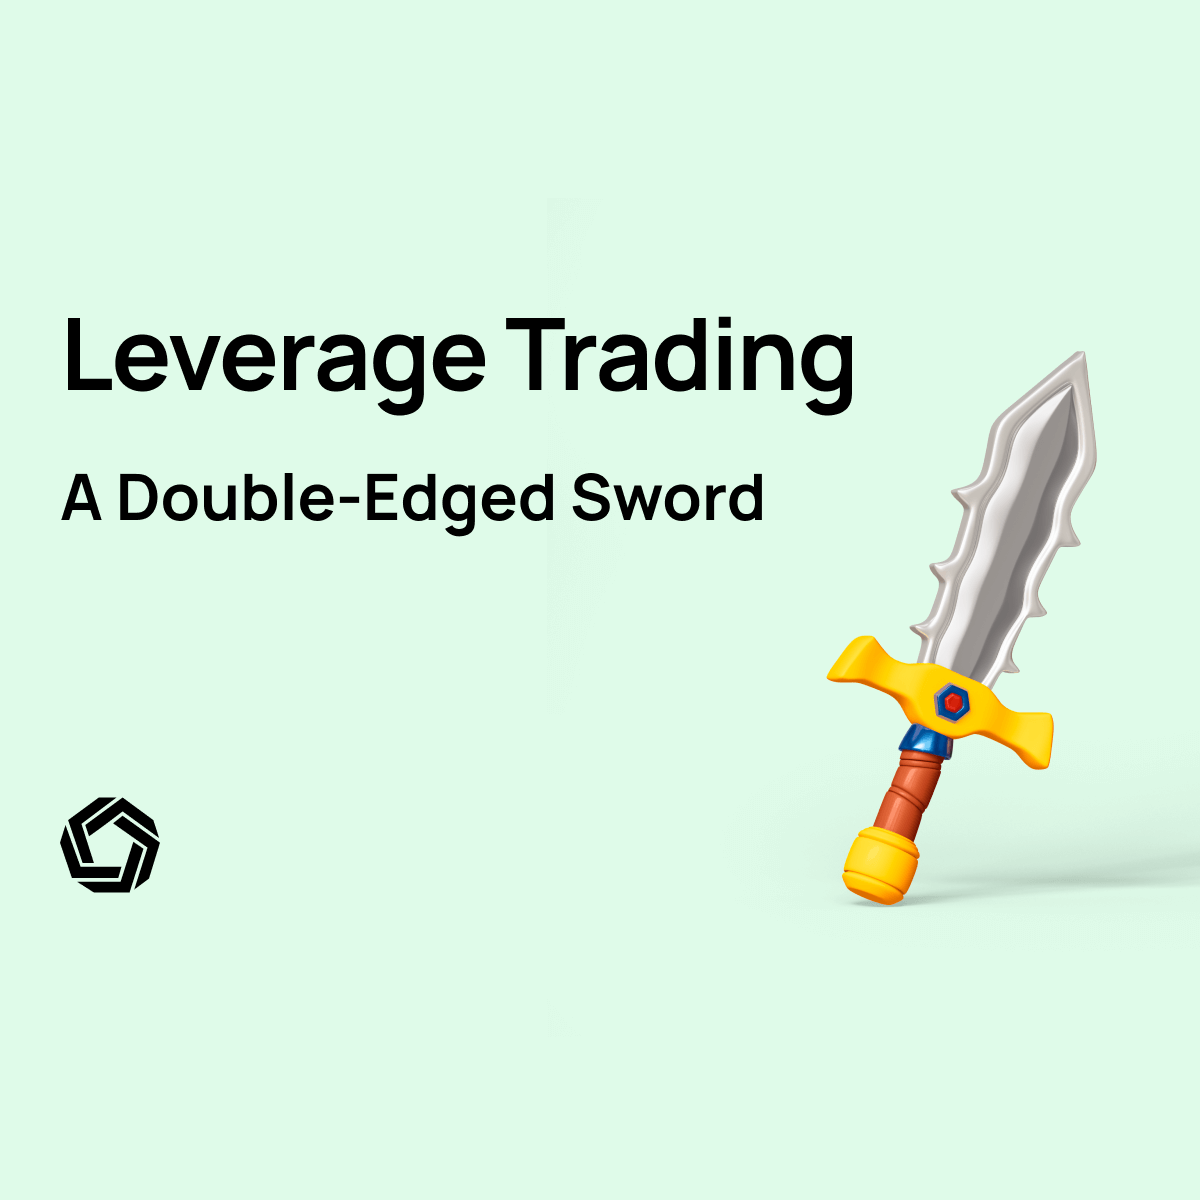 Leverage Trading